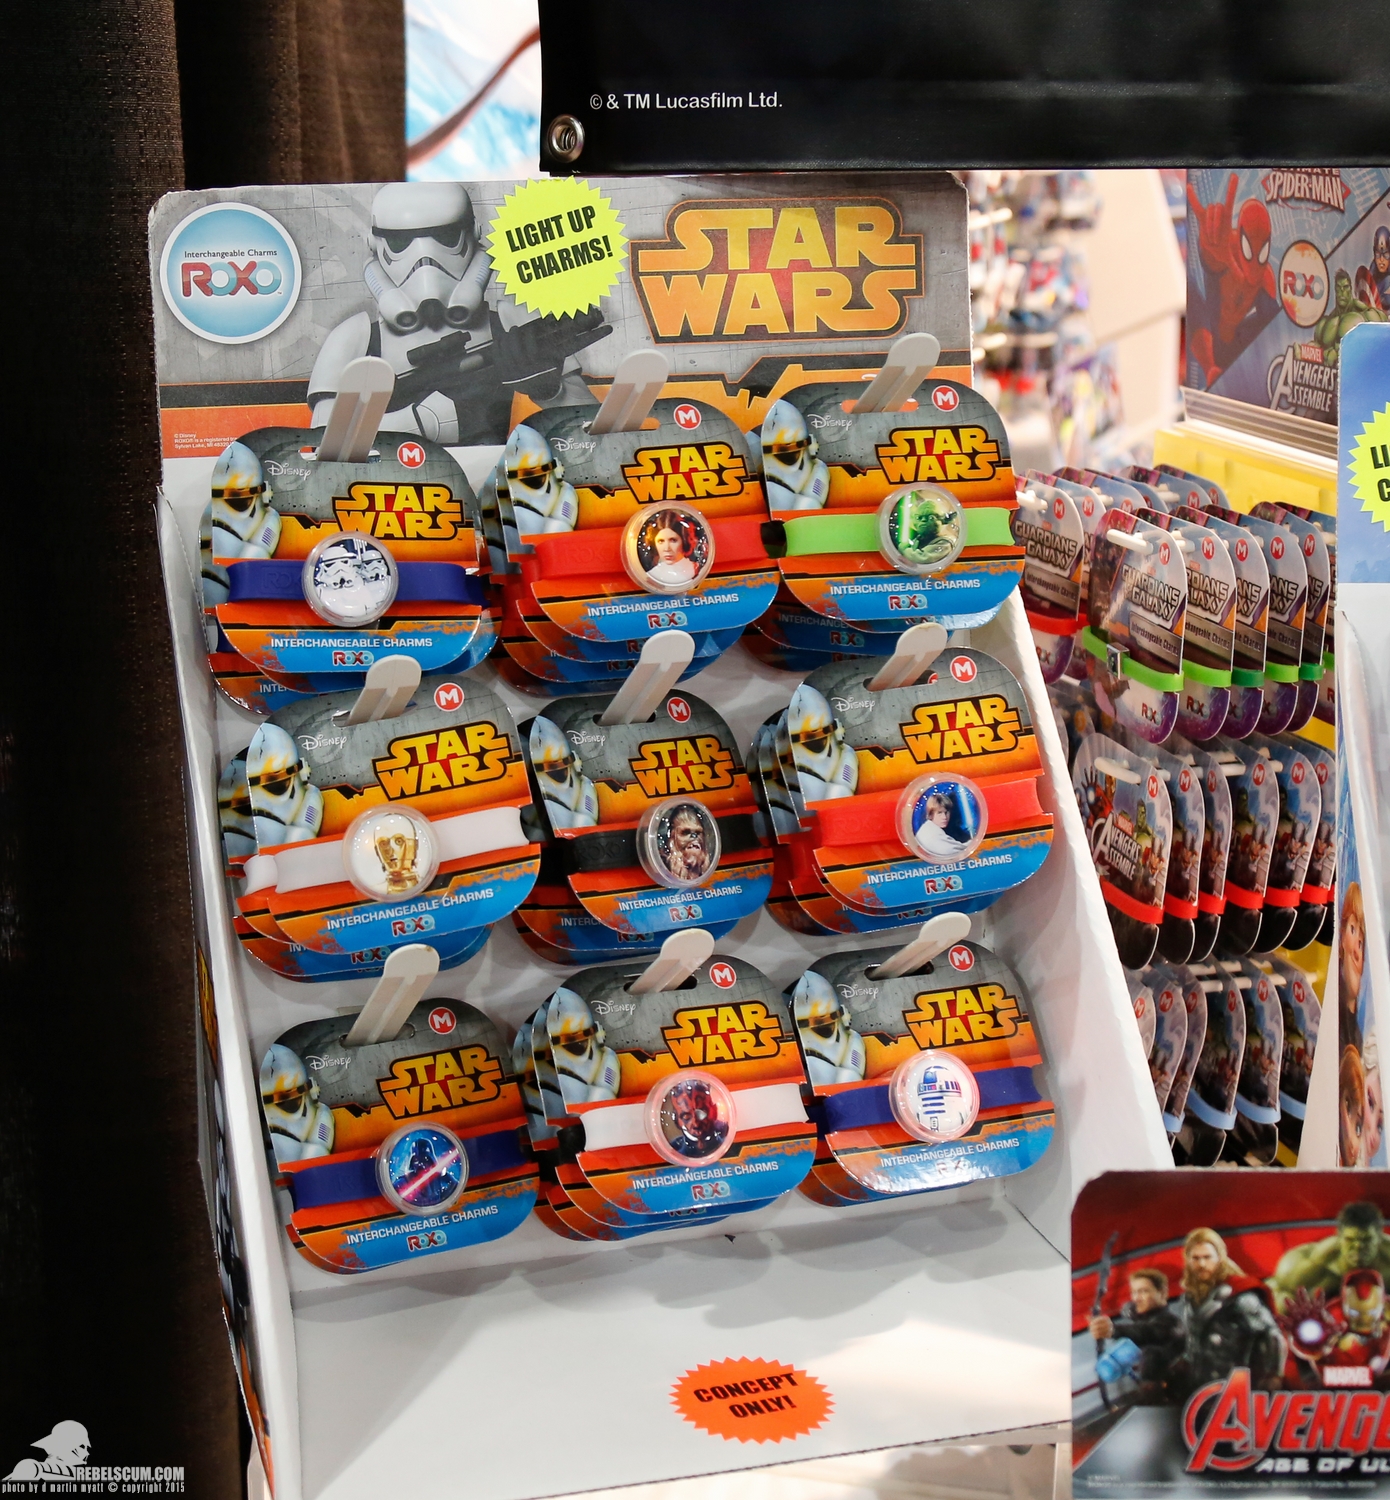 2015-International-Toy-Fair-Roxo-Star-Wars-002.jpg